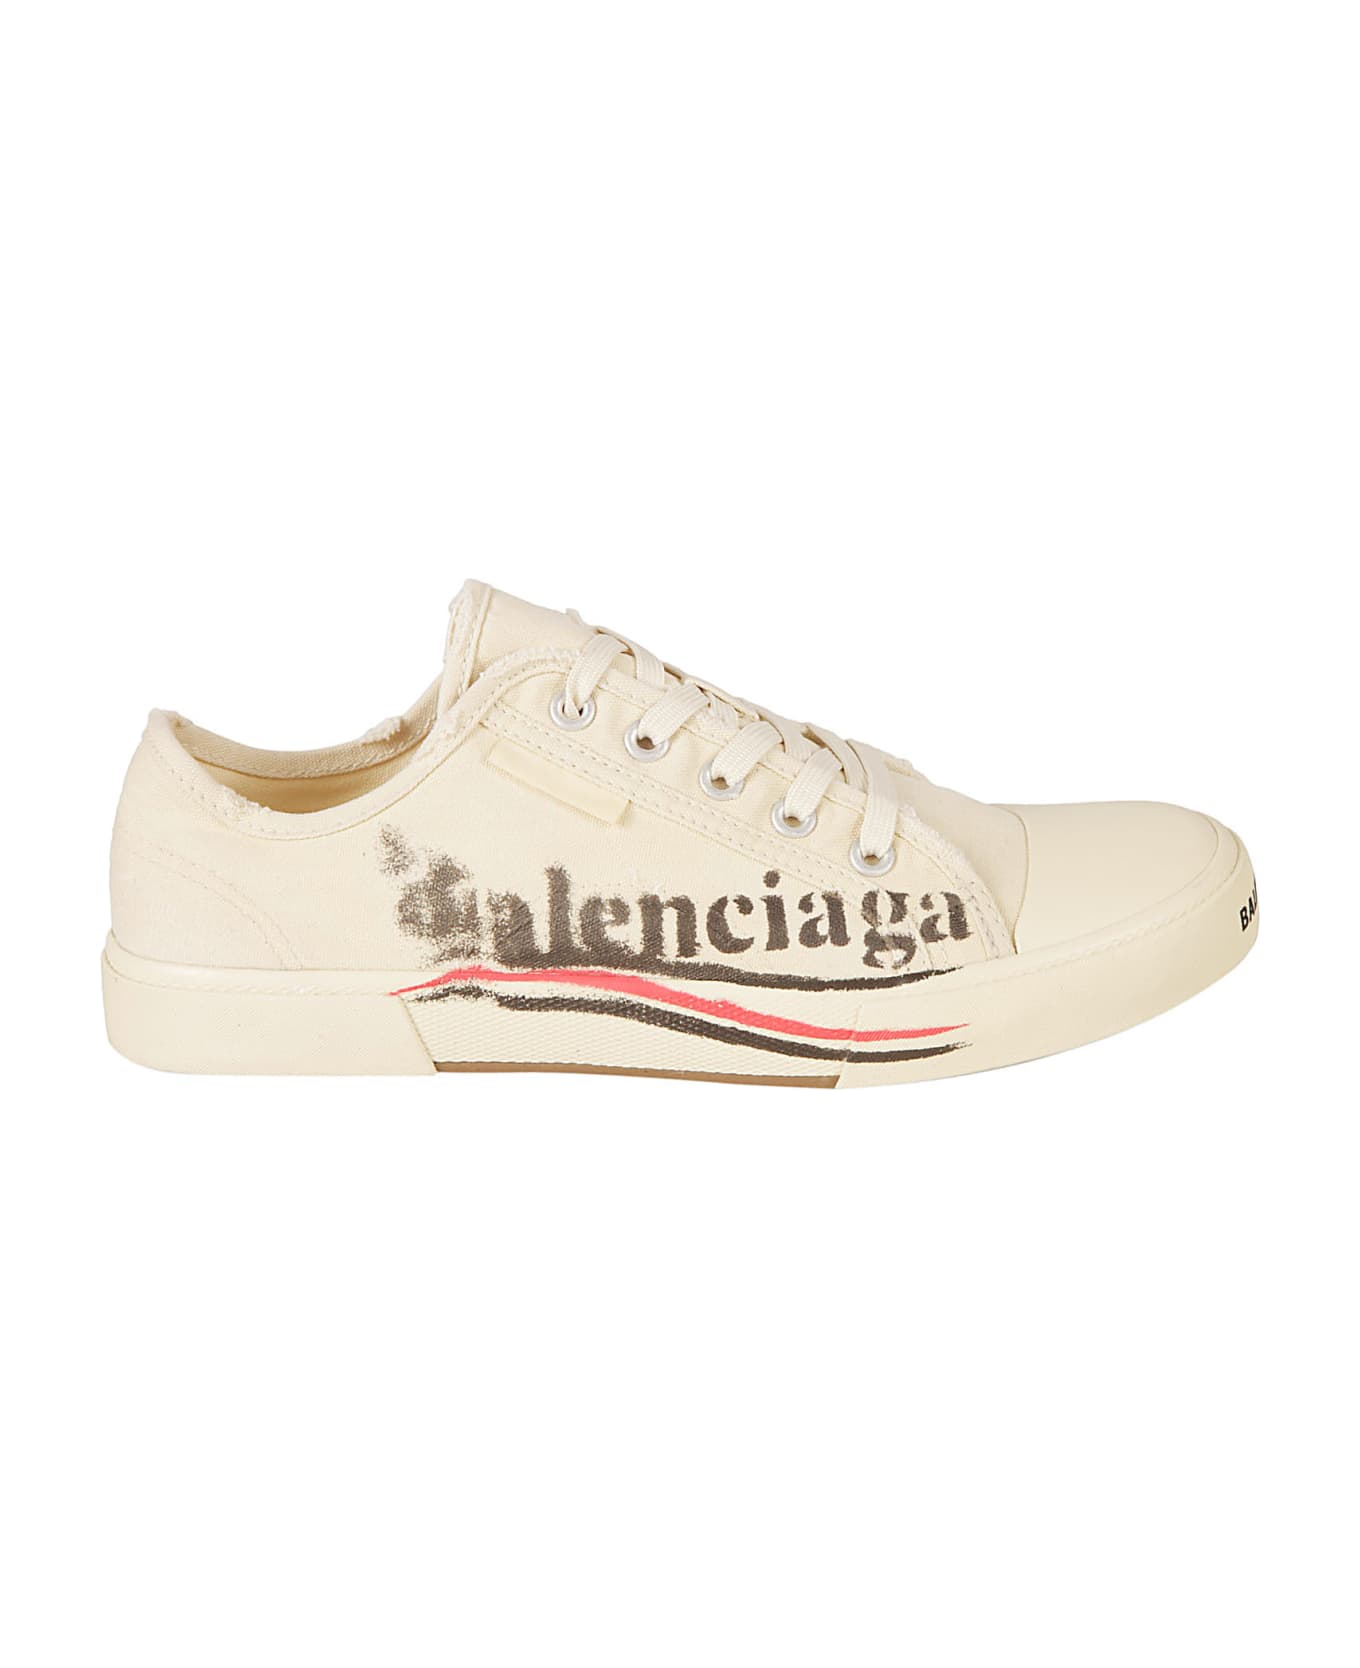 Balenciaga Paris Low Top Sneakers - White